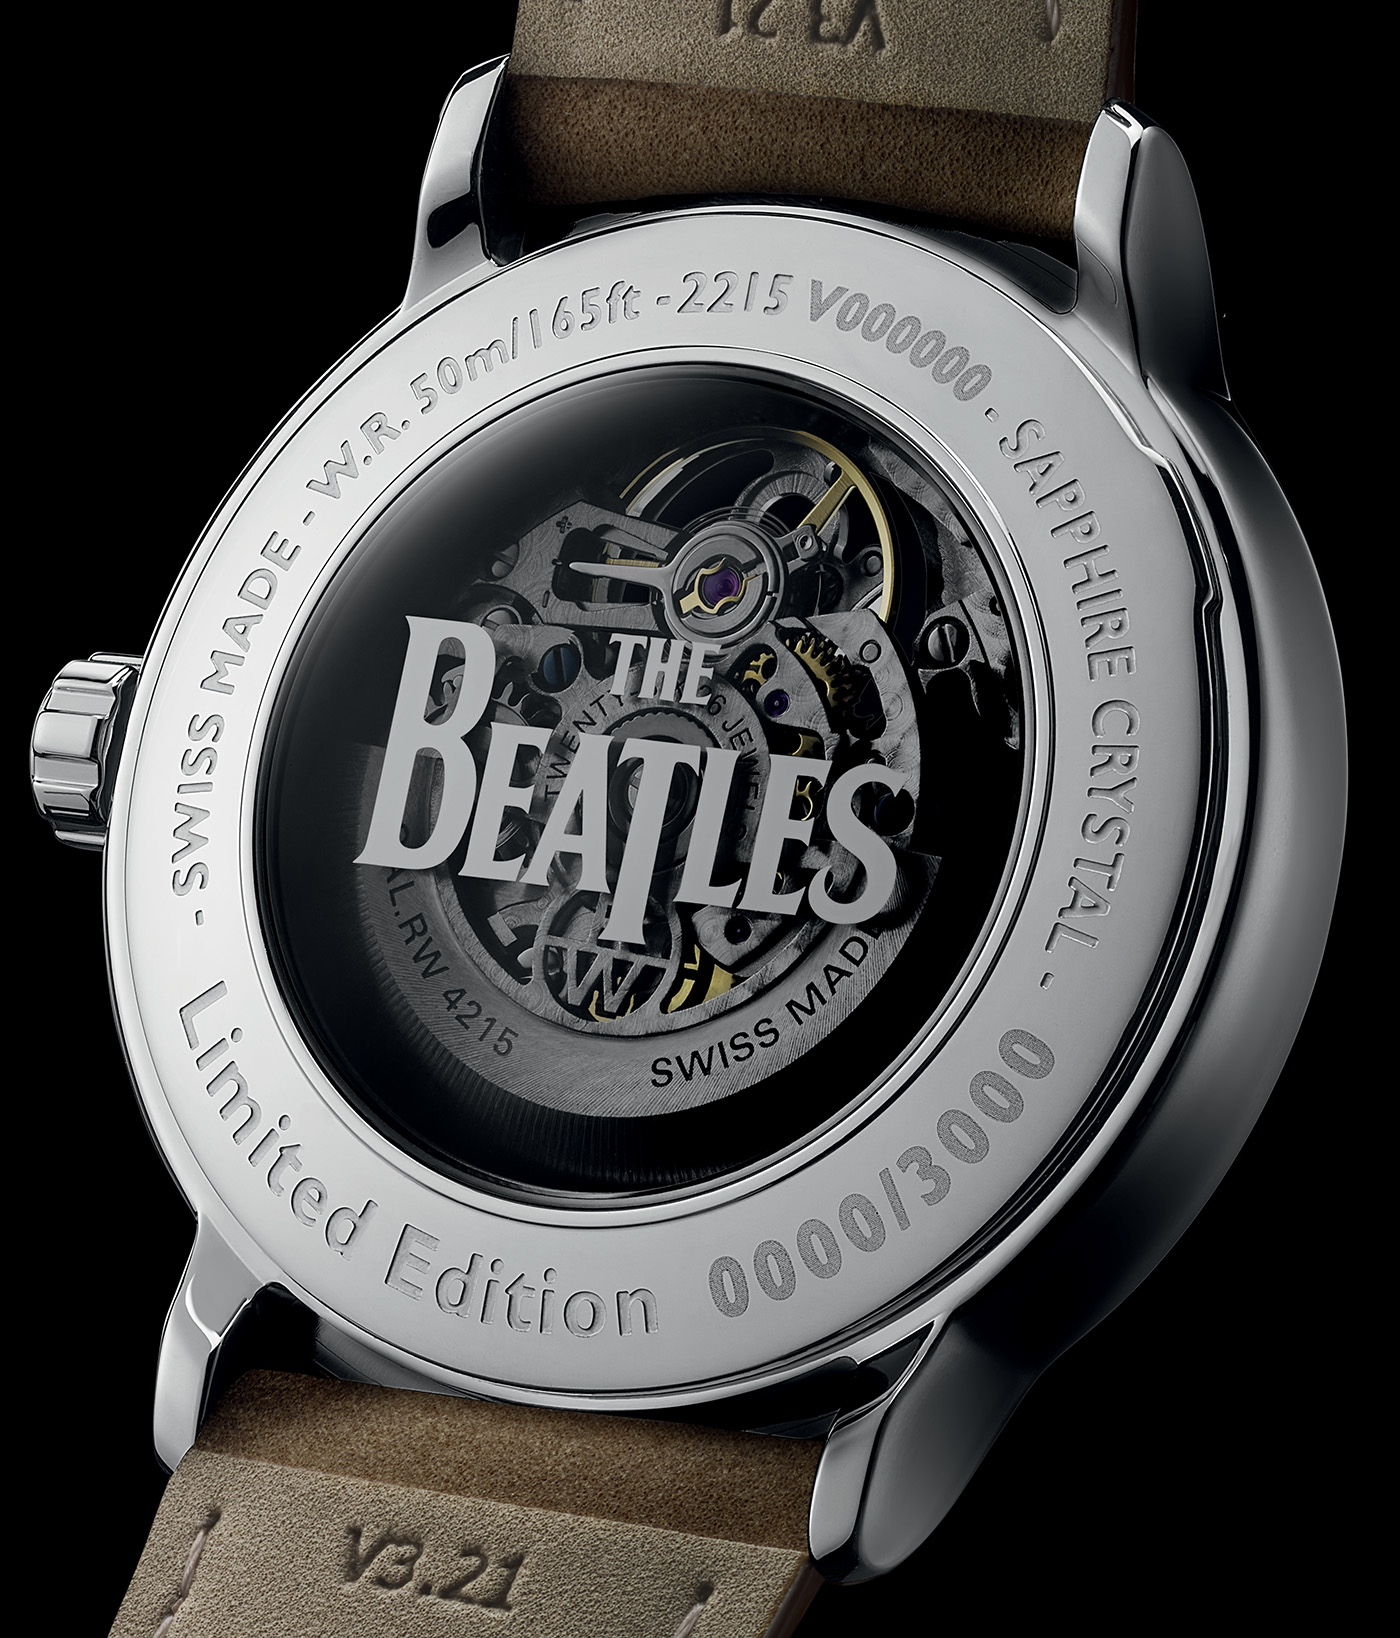 Raymond Weil представляет часы Maestro The Beatles Let It Be ограниченной серии